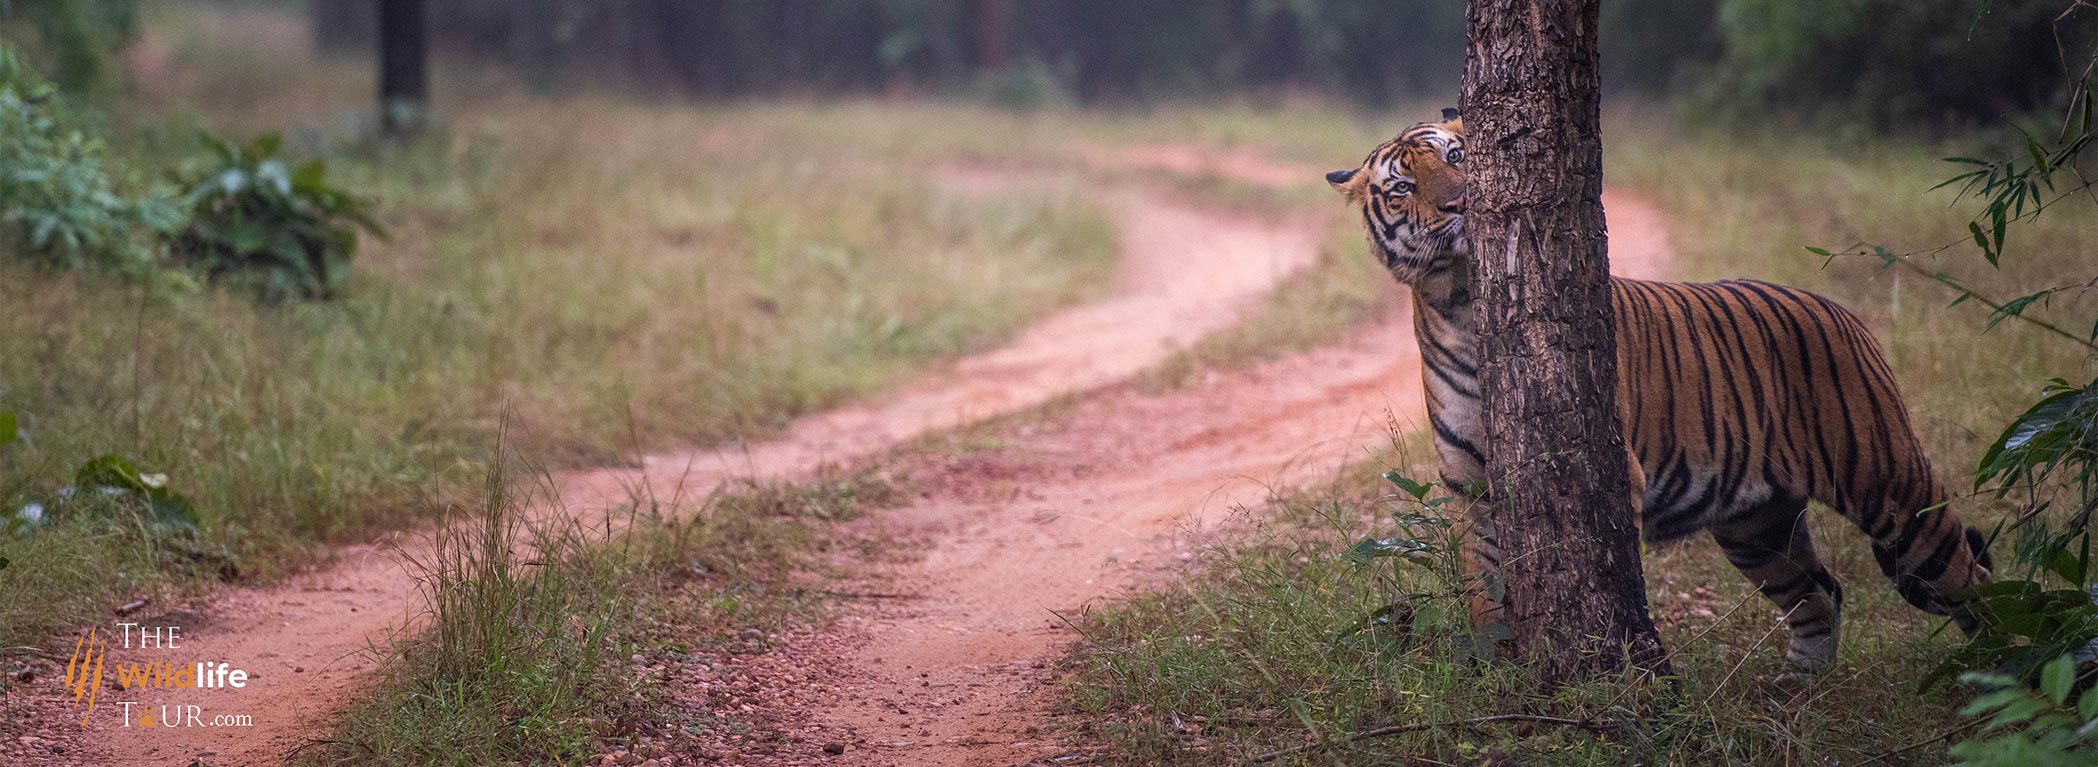 Tiger Safari in India | Wildlife Safari In India | Wildlife photography tour In India